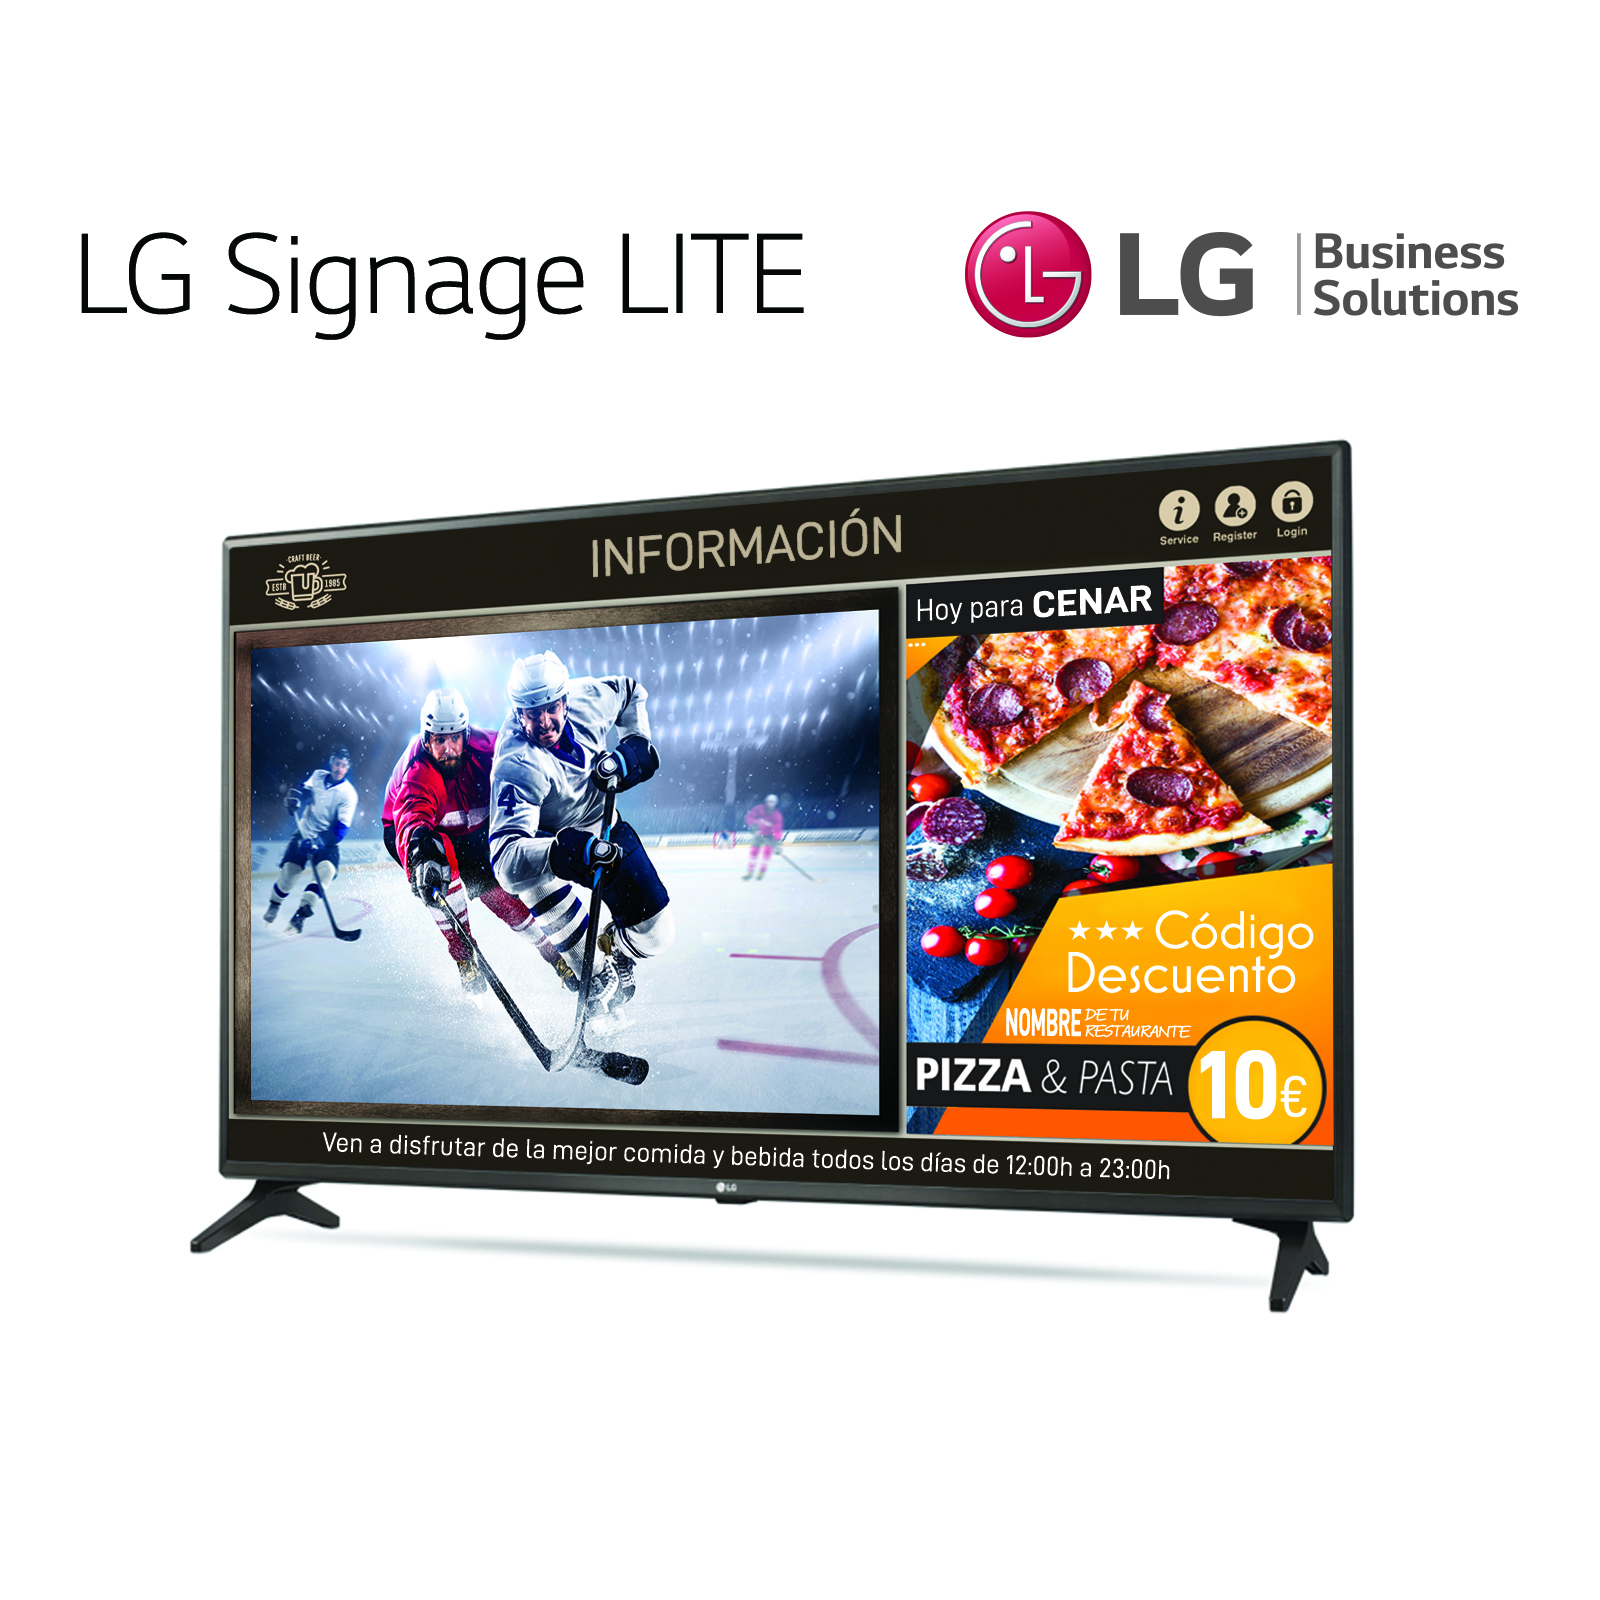 LG Signage Lite, dos nuevos televisores preparados para el mundo profesional